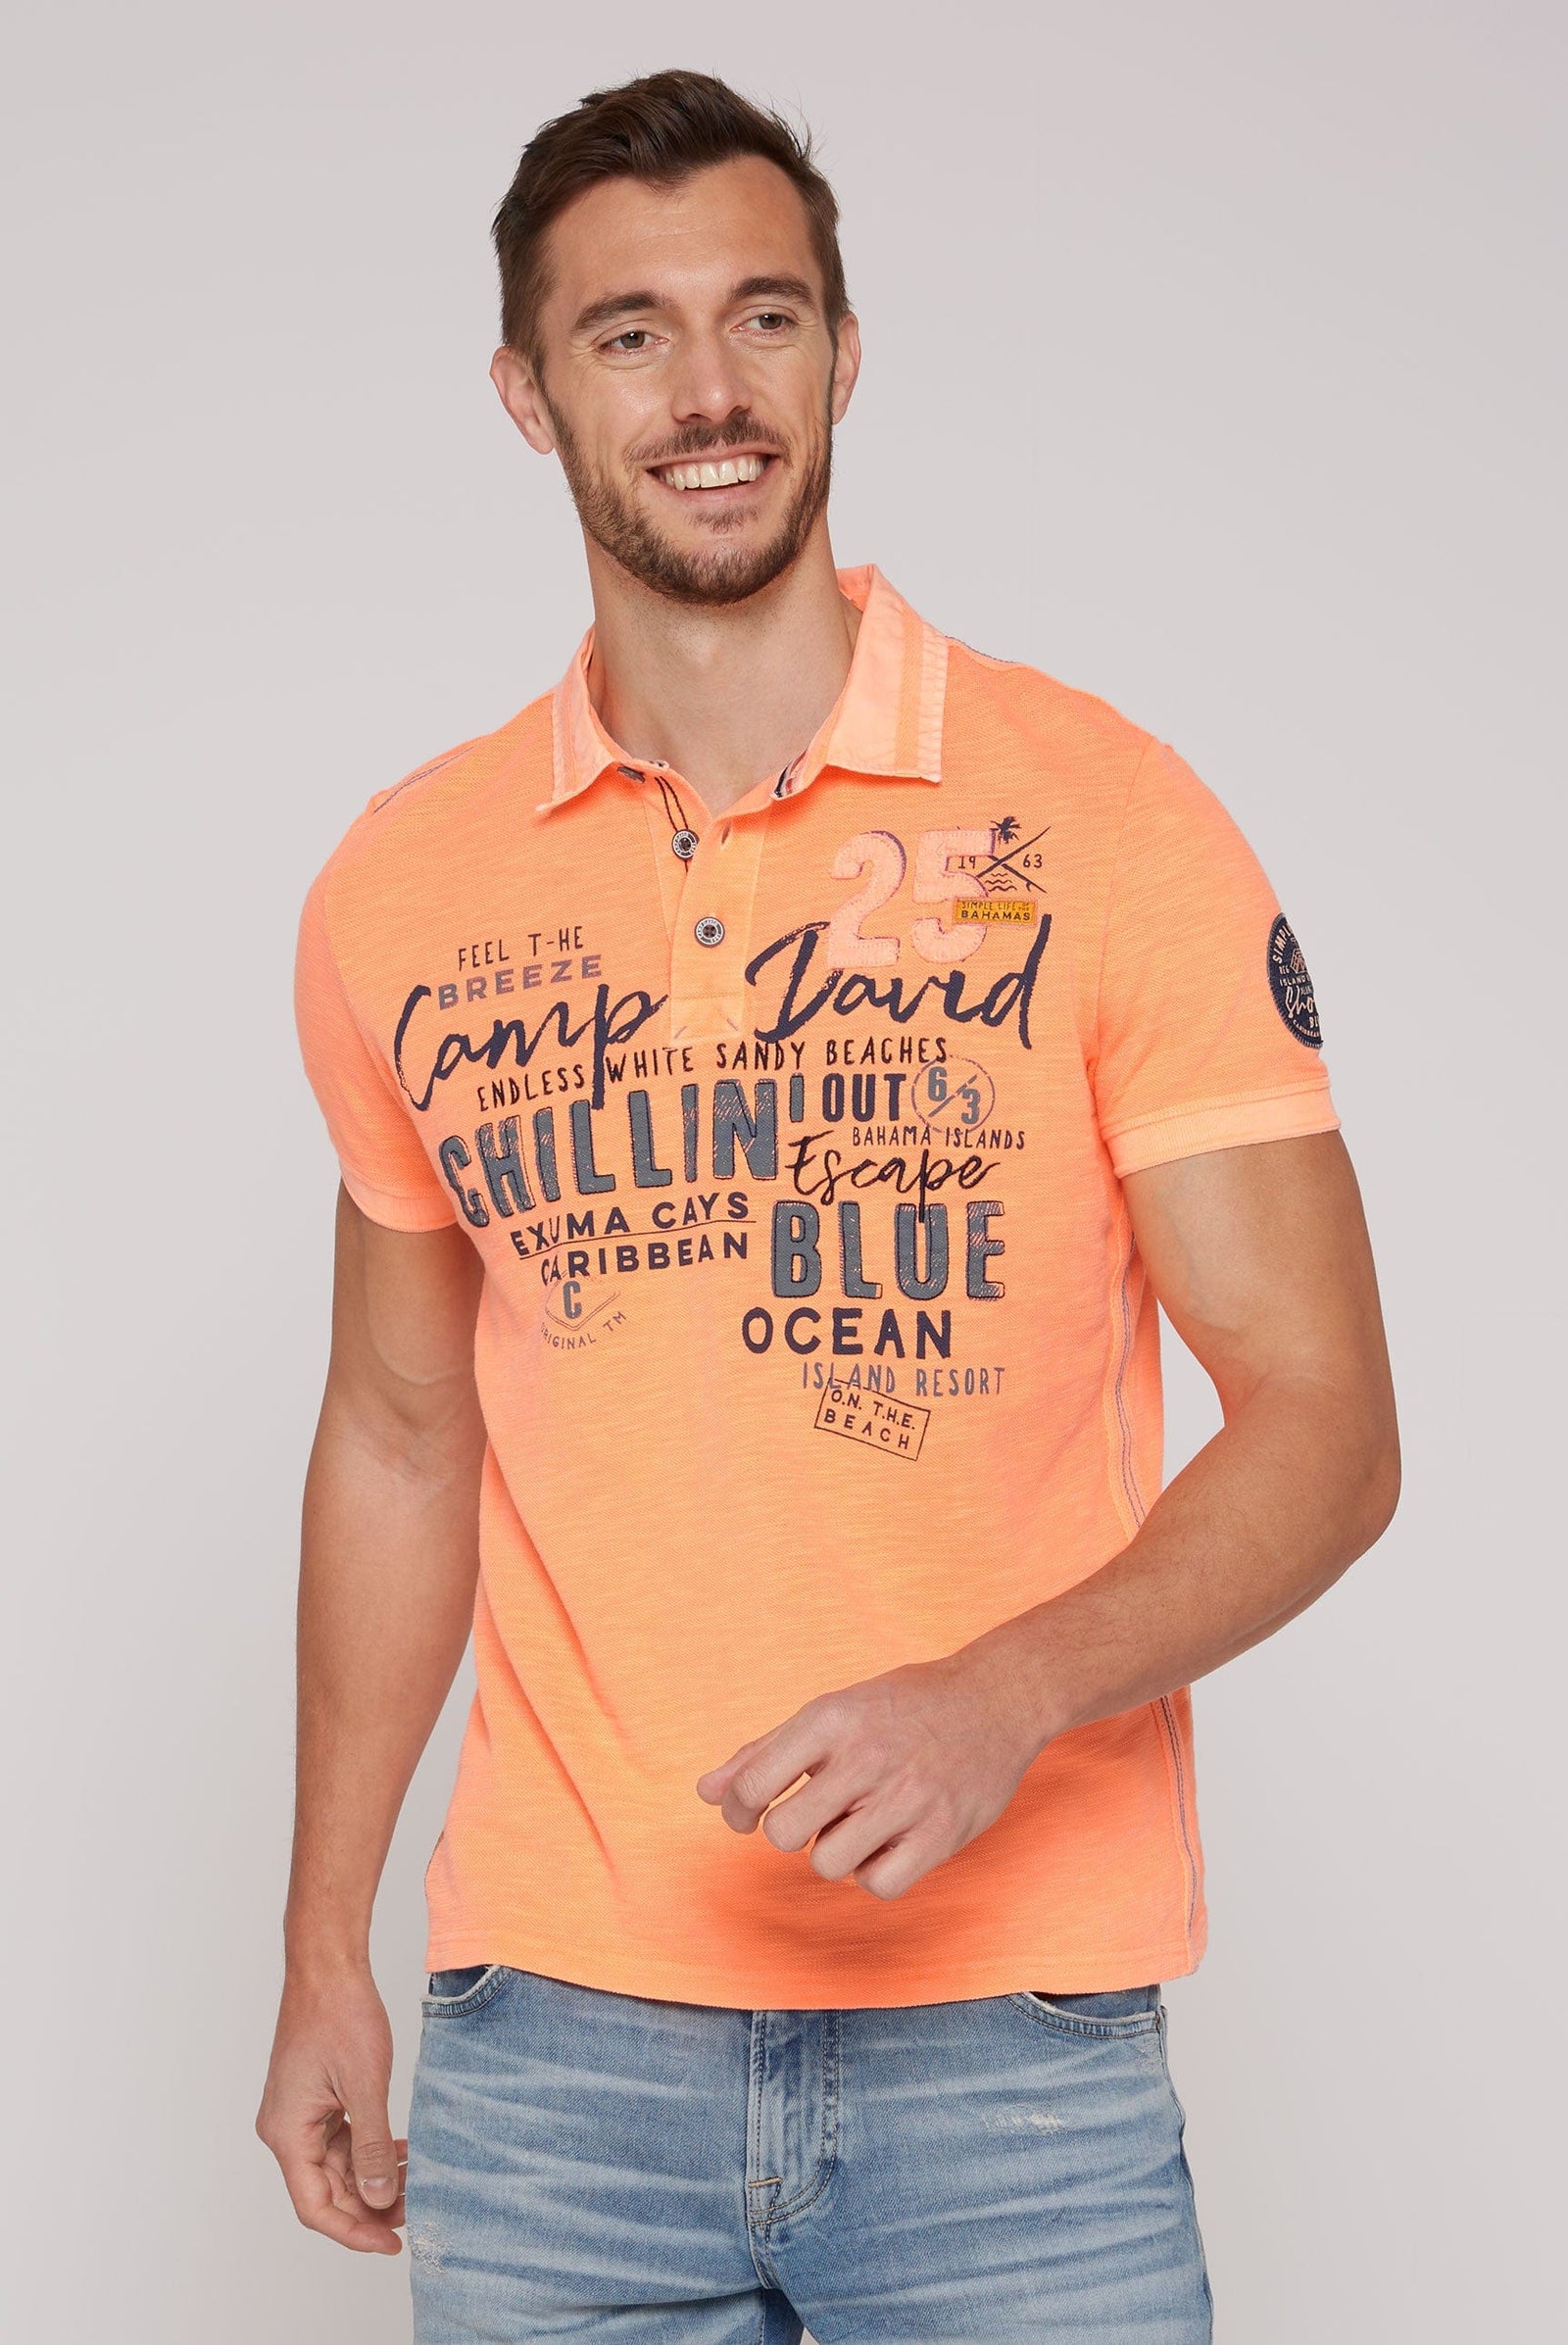 short Cool Stateshop - David Life, Mint Fashion Poloshirt Camp Beach sleeves,